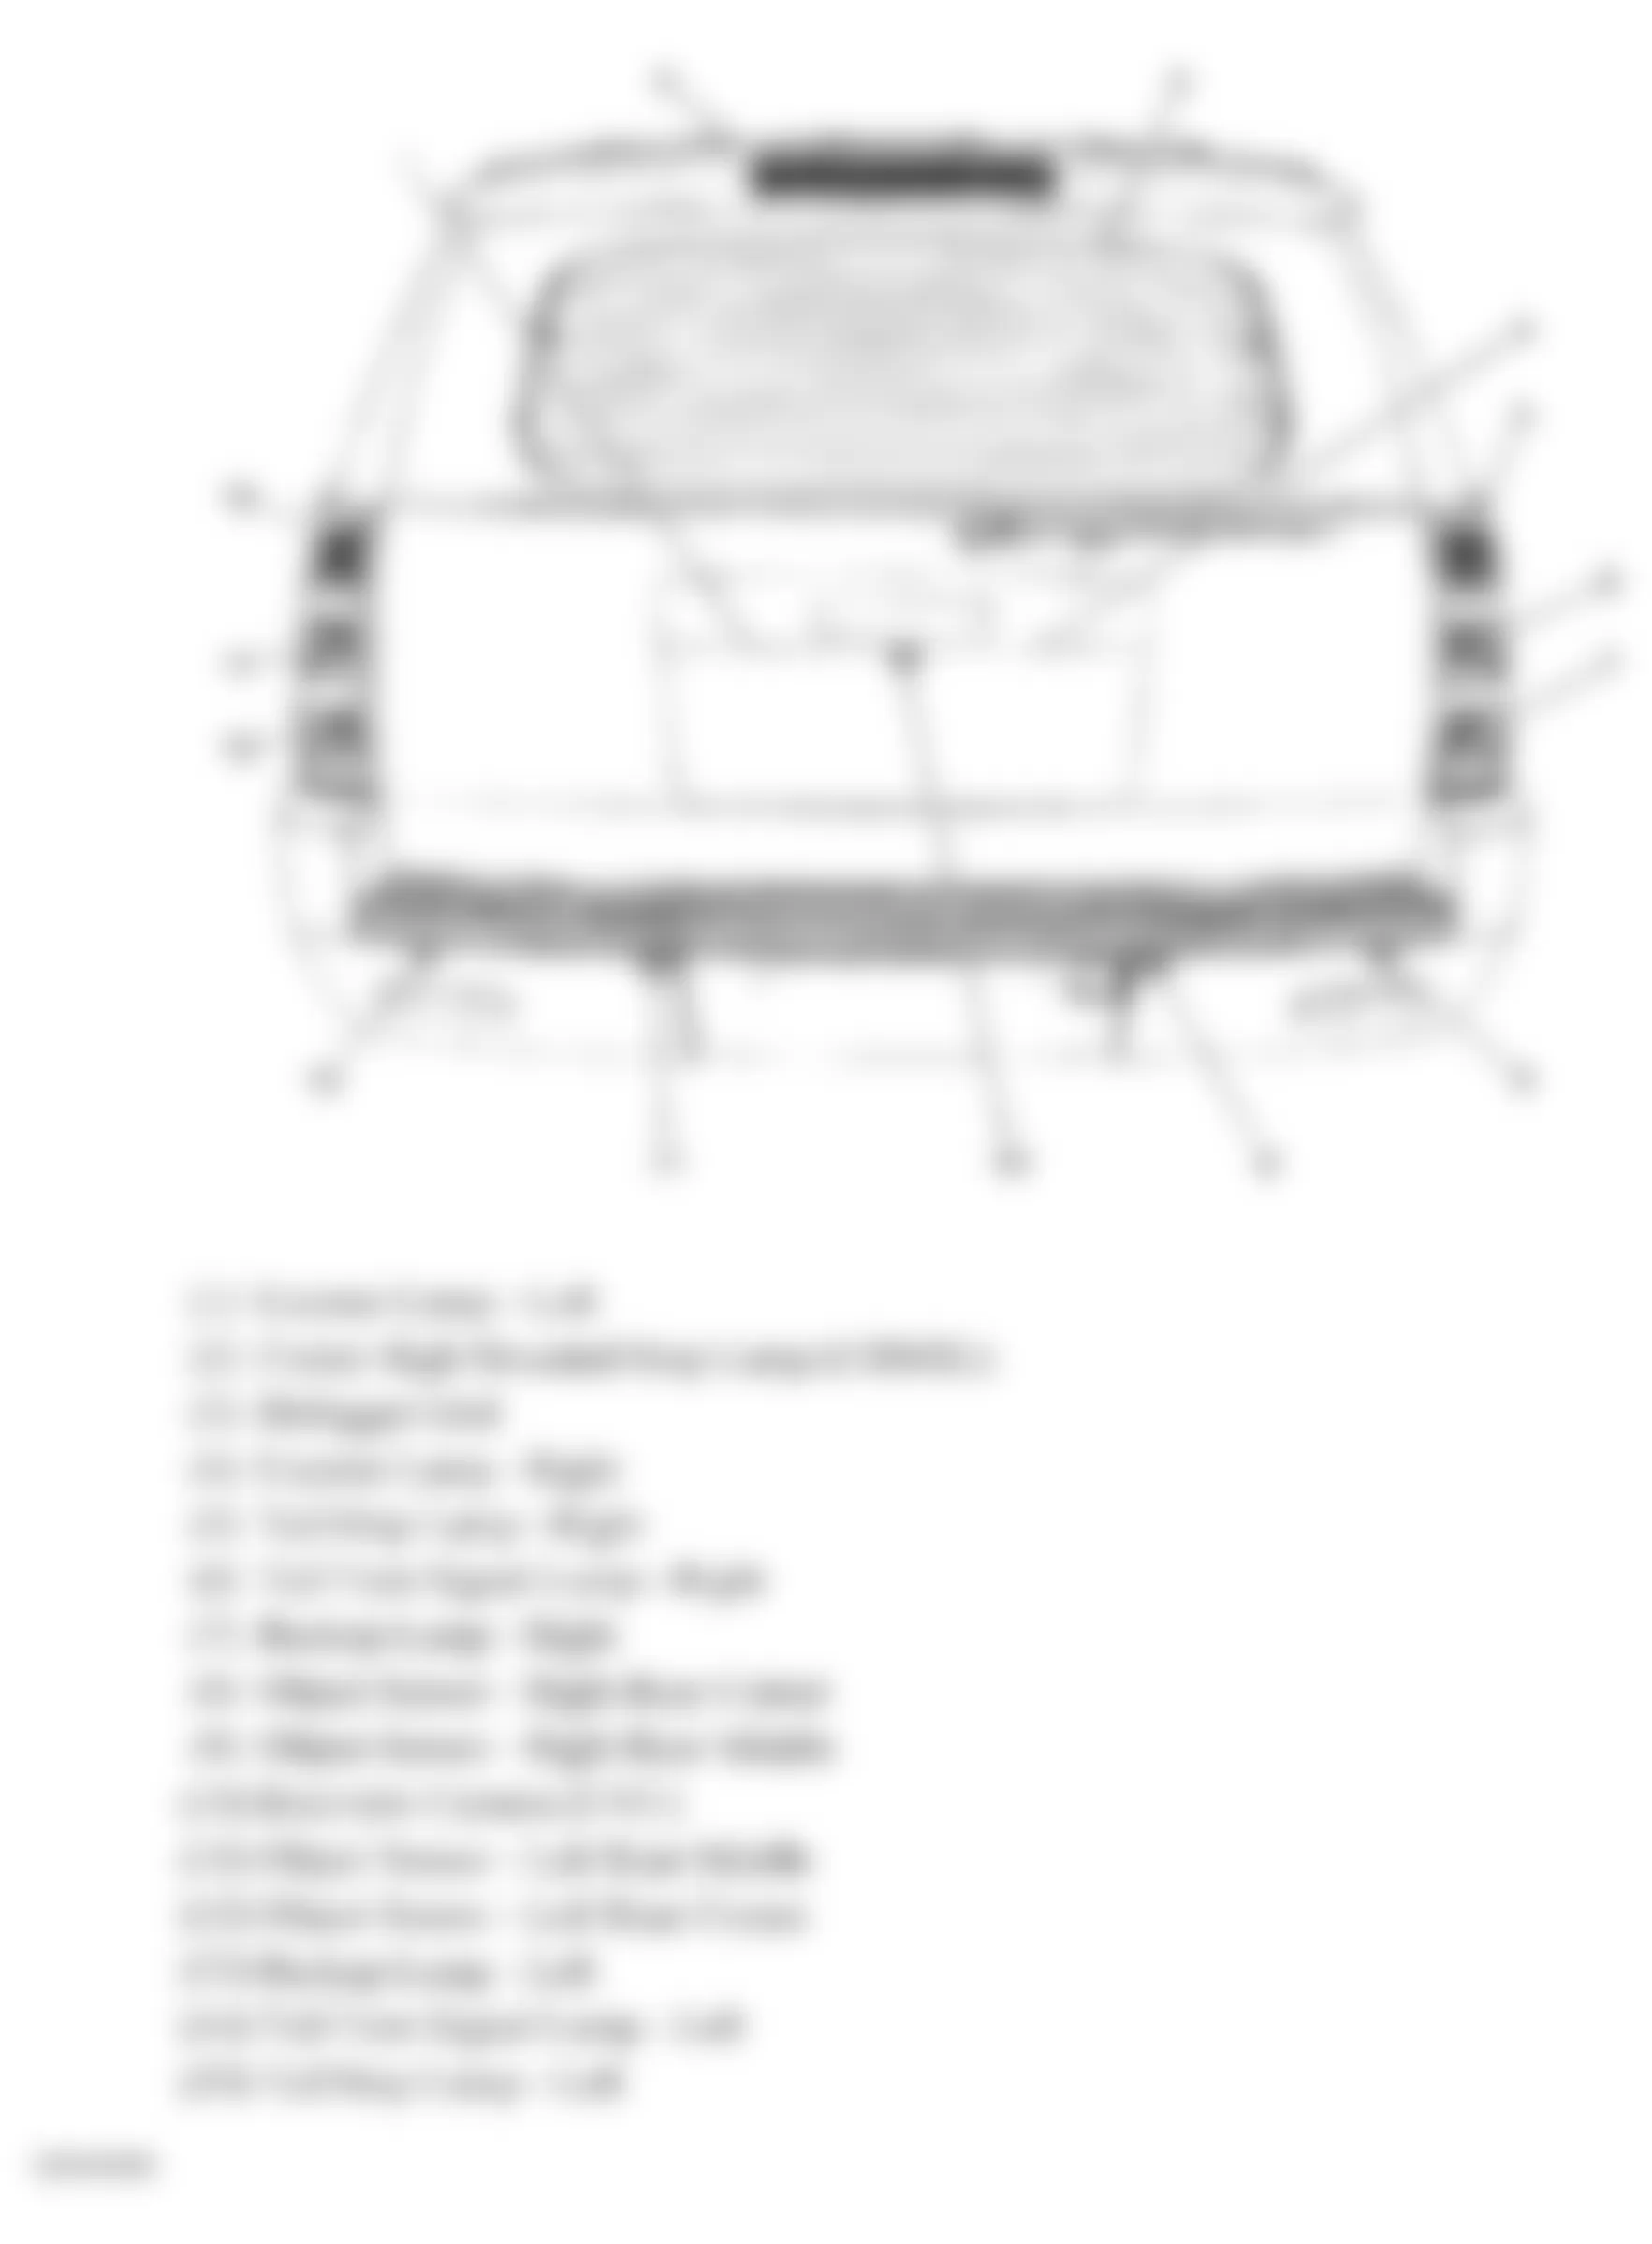 GMC Yukon Denali 2009 - Component Locations -  Rear Of Vehicle (Yukon W/One Piece Liftgate)